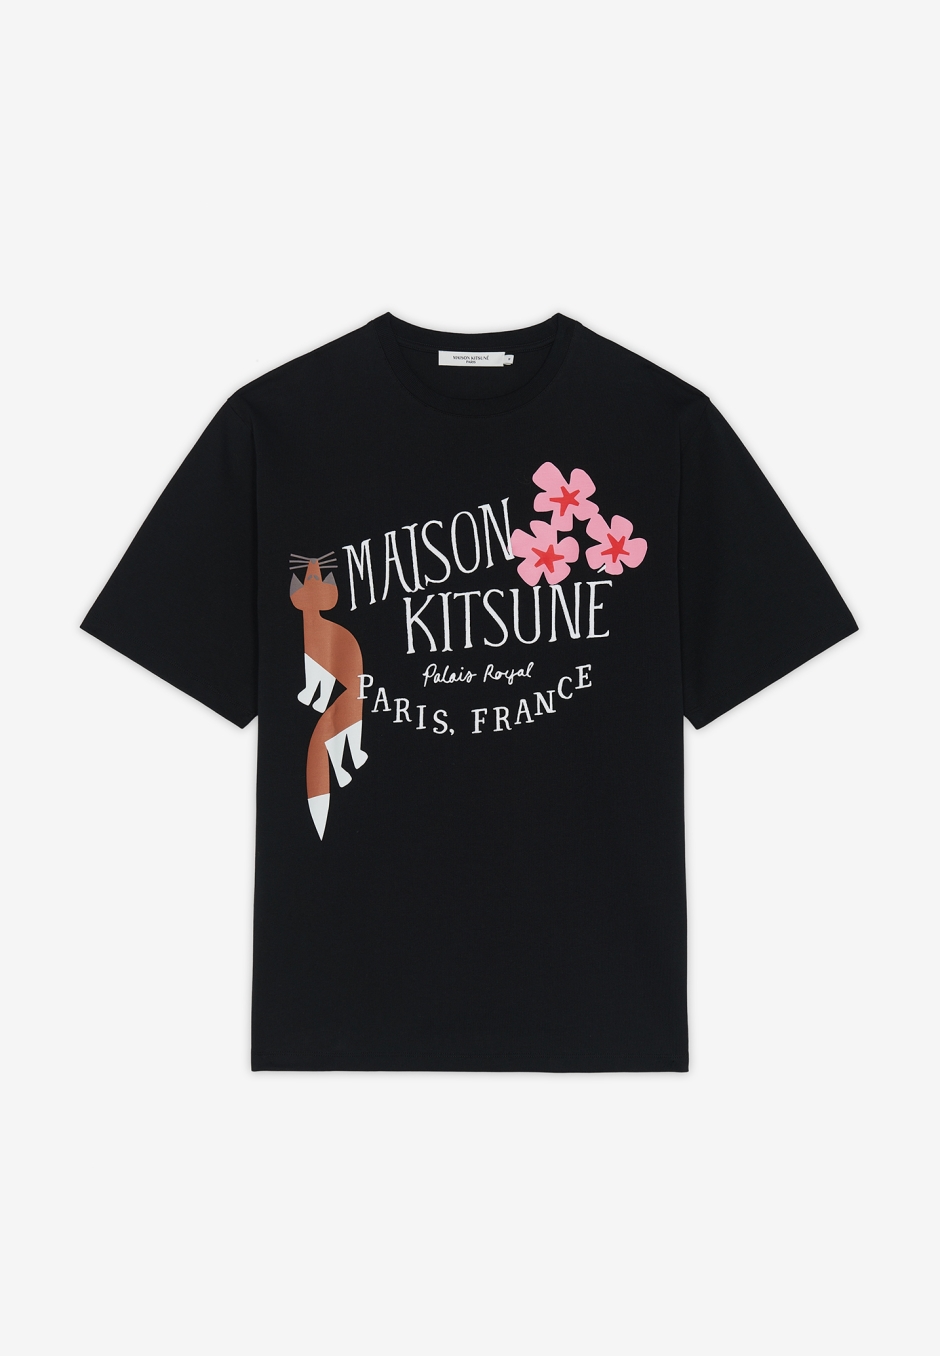 Maison Kitsuné Bill Rebholz Palais Royal Easy Tee-Shirt